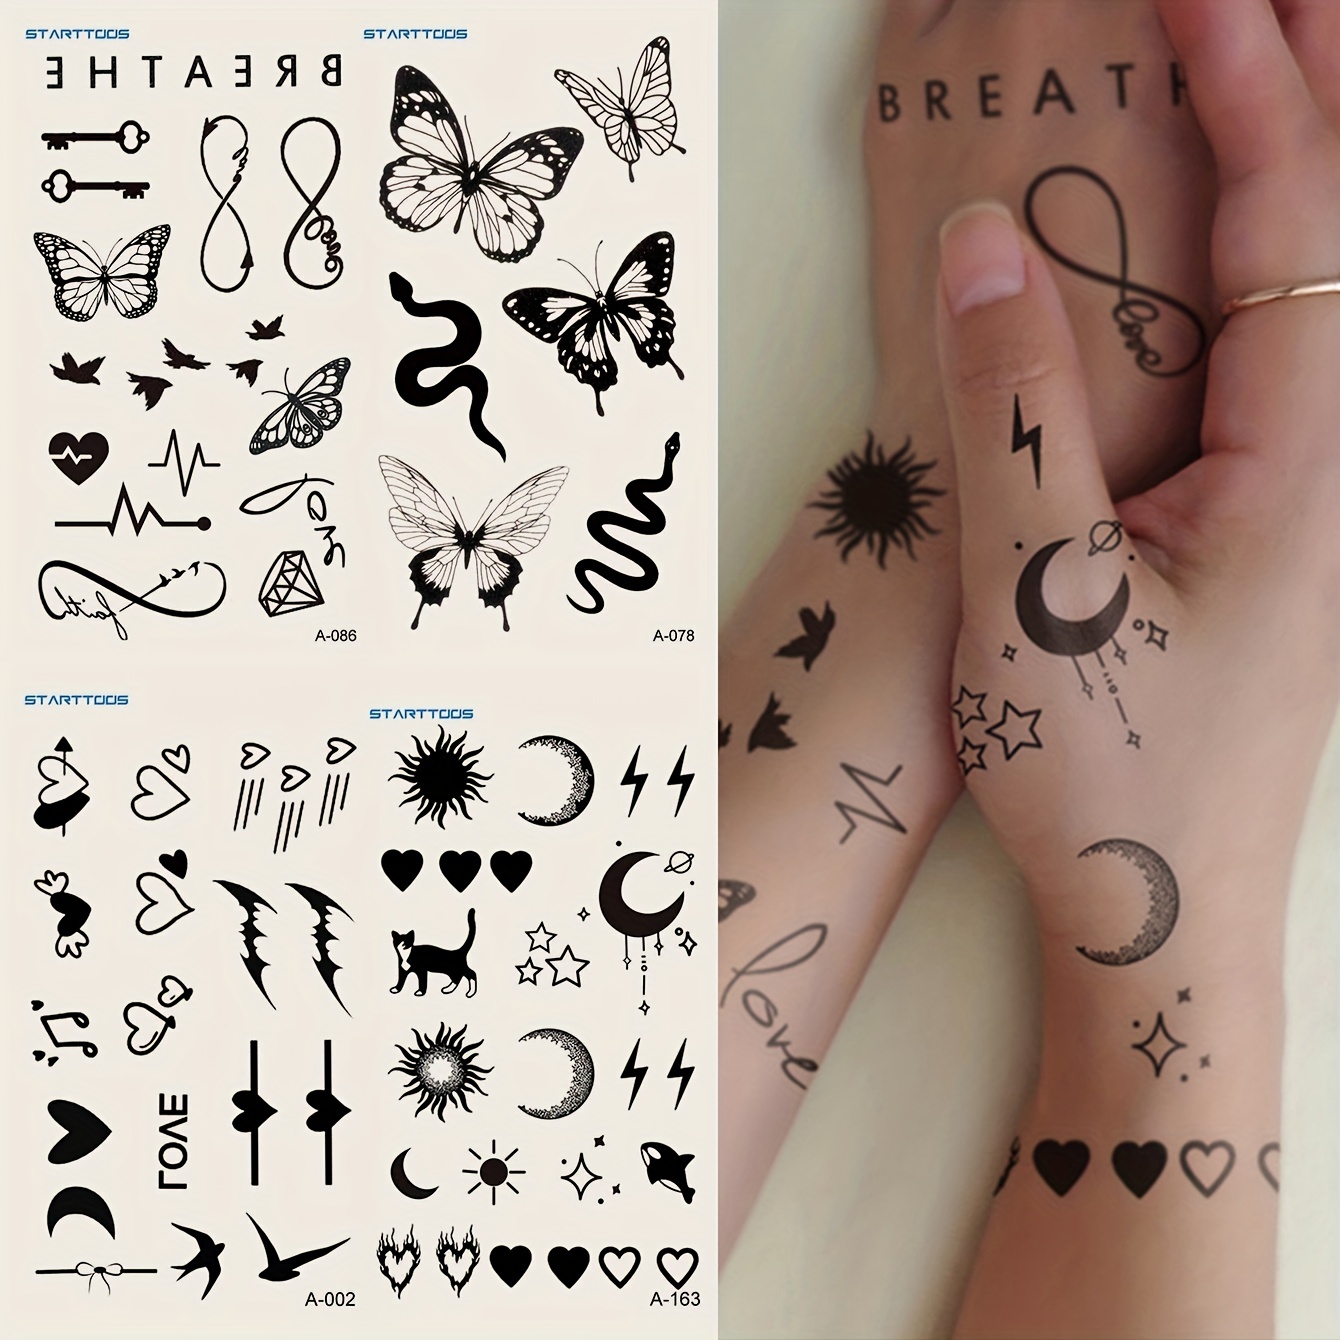 

4 Sheets Temporary Tattoo Sticker Black Butterfly Crescent Moon Love Heart Snake Pattern Finger Wrist Body Small Parts Body Art Fake Tattoo